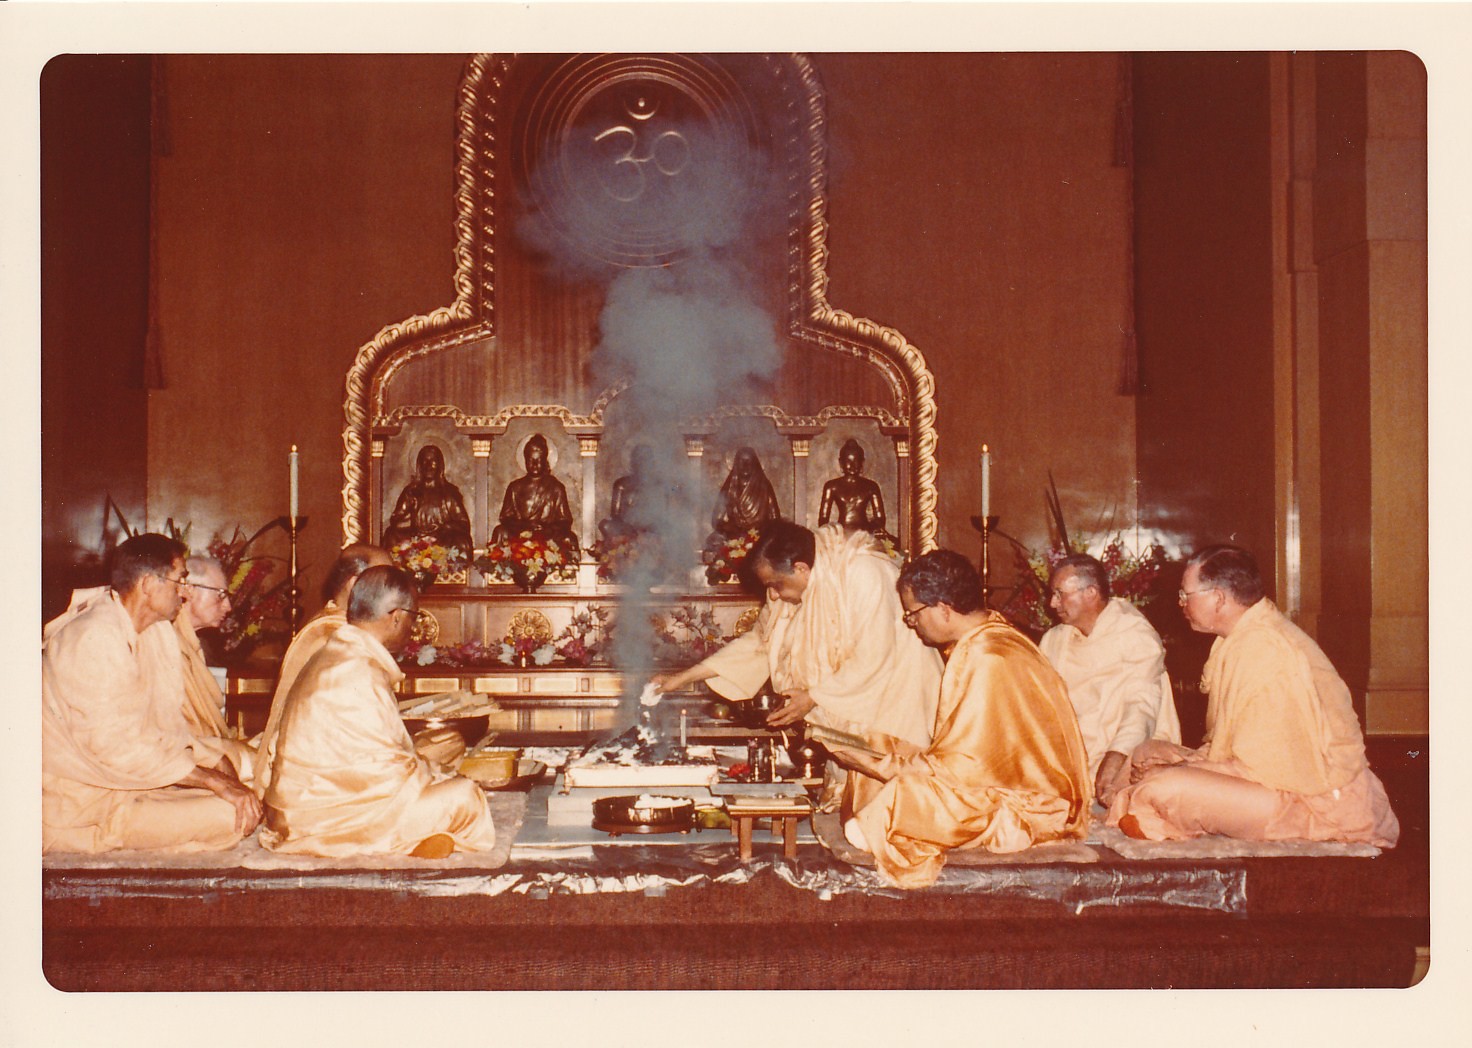 Swami Bhaktimayananda Swami Chidrupananda Swami Shraddhananda Swami Prabuddhananda Swami Swahananda Swami Aseshananda Swami Sahajananda Swami Asitananda